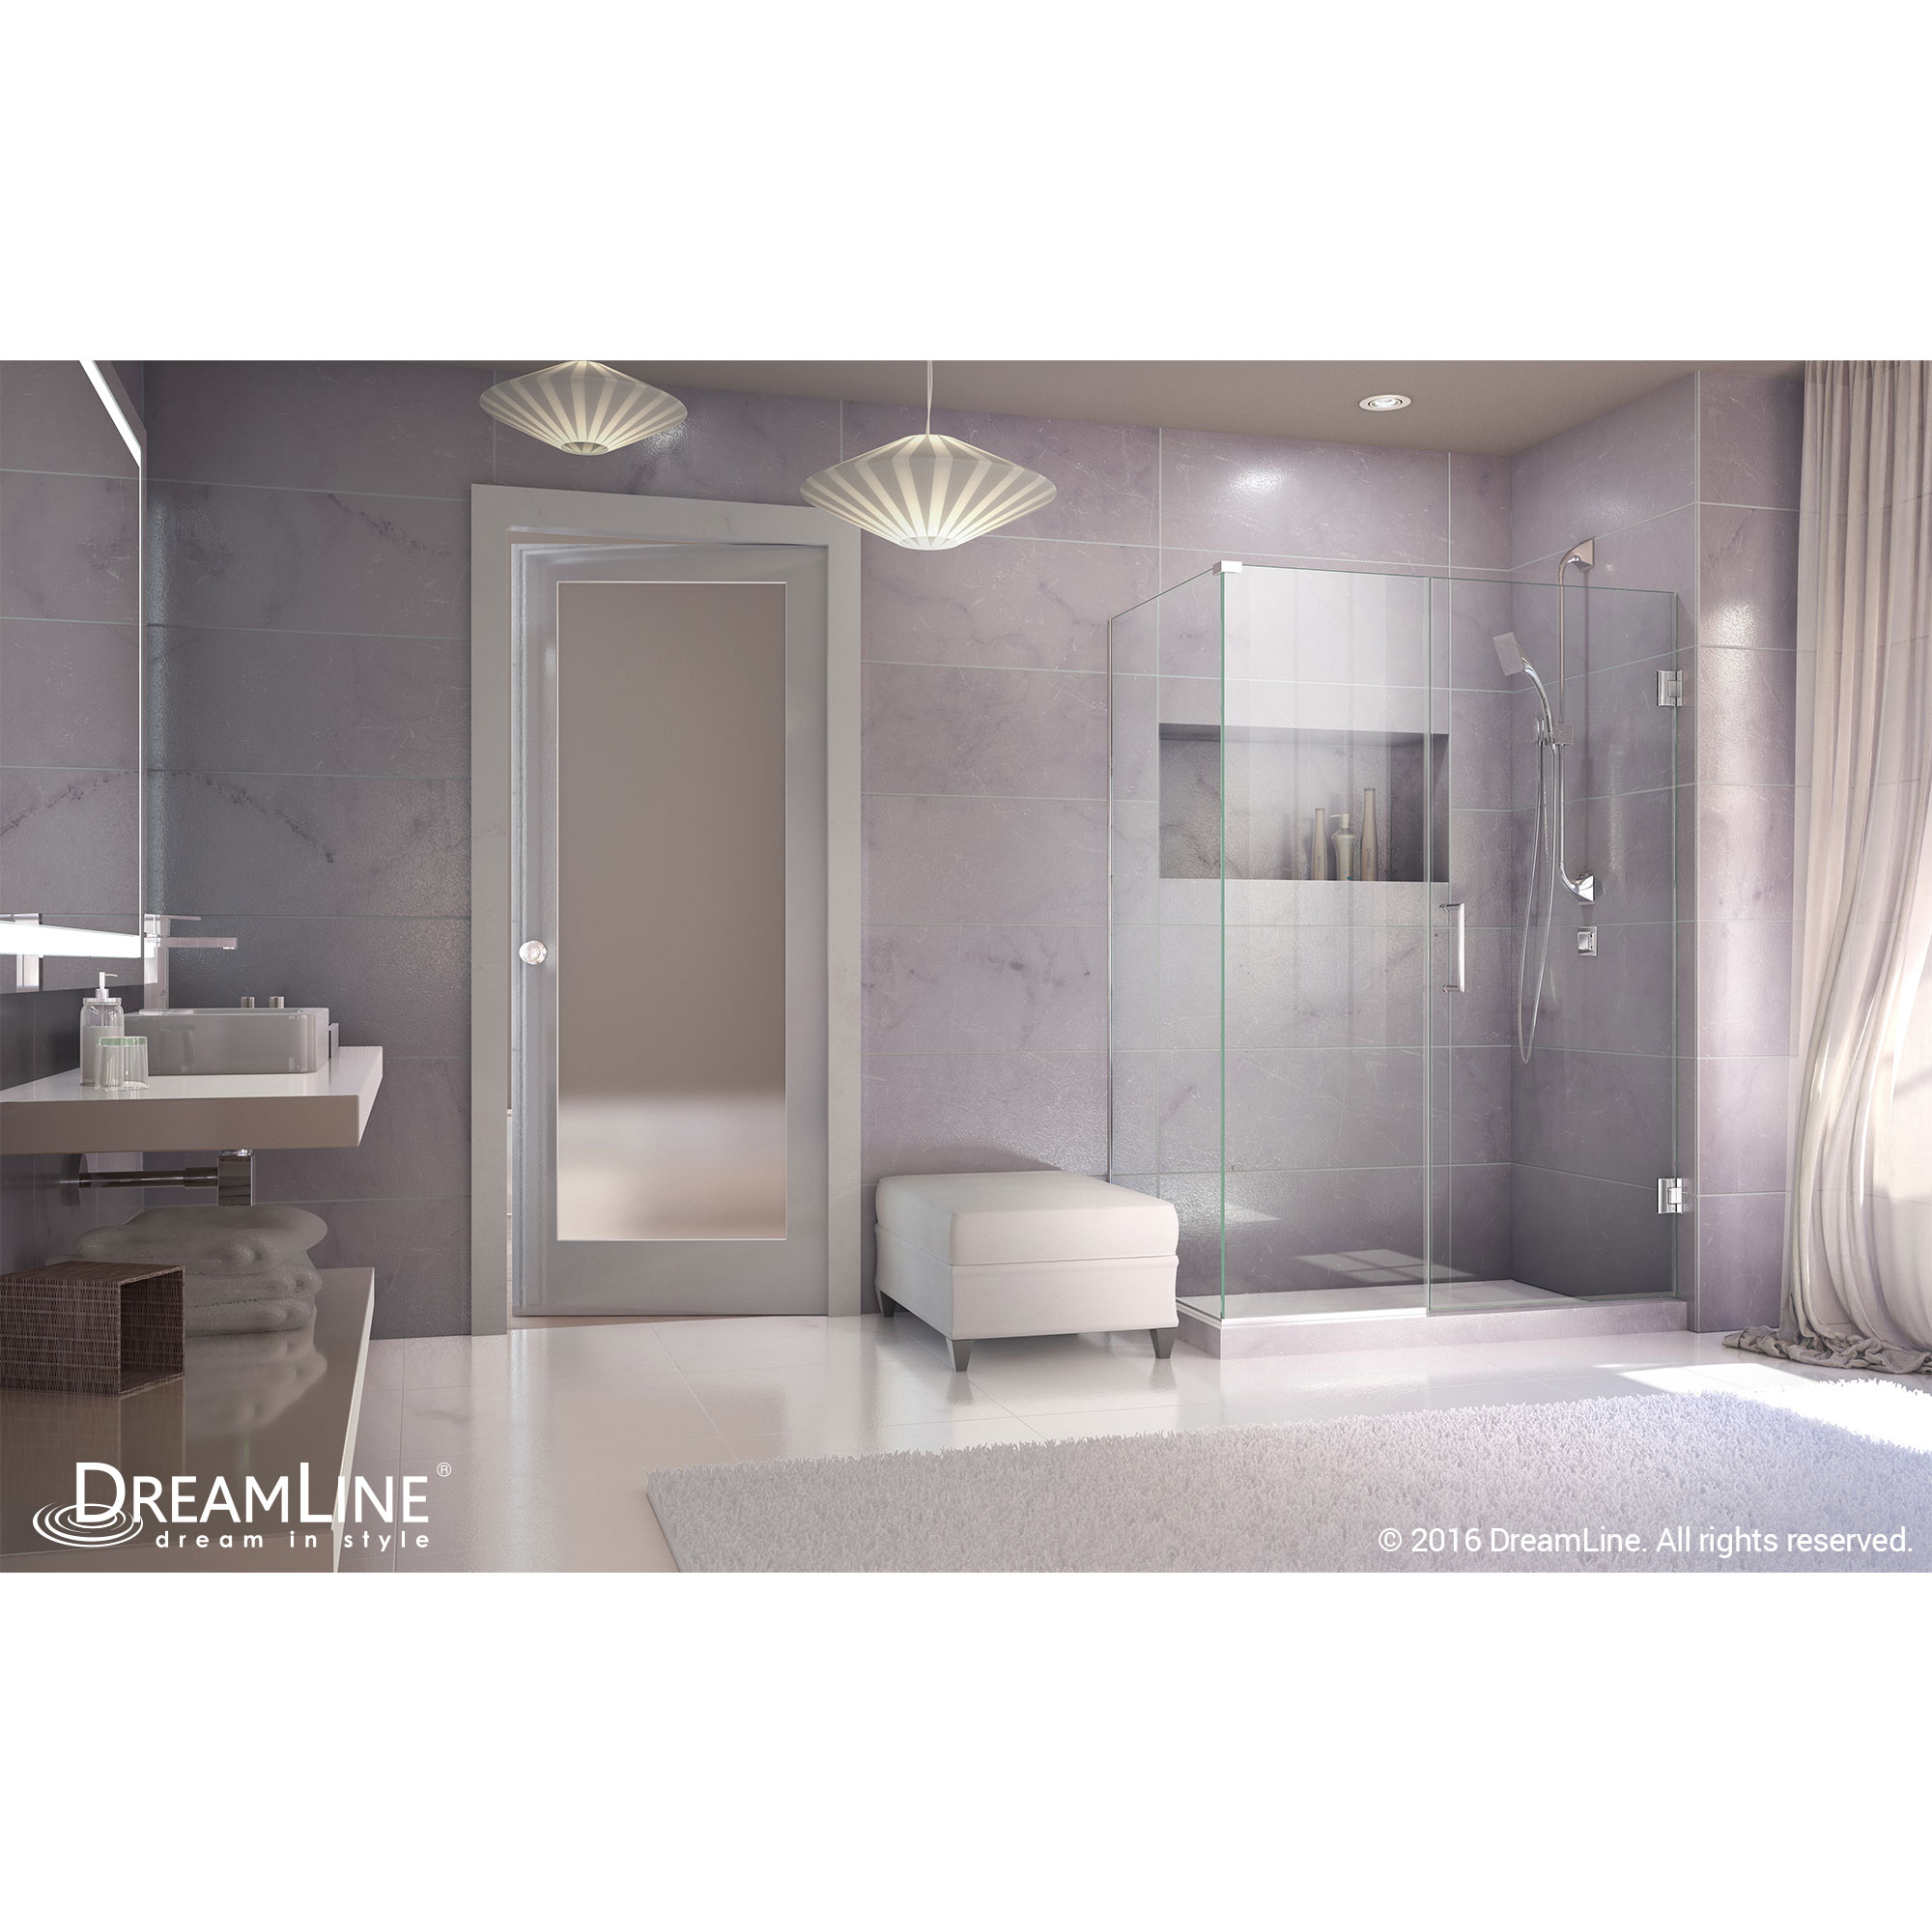 DreamLine SHEN-24425300-01 Unidoor Plus Hinged Shower Enclosure In Chrome Finish Hardware